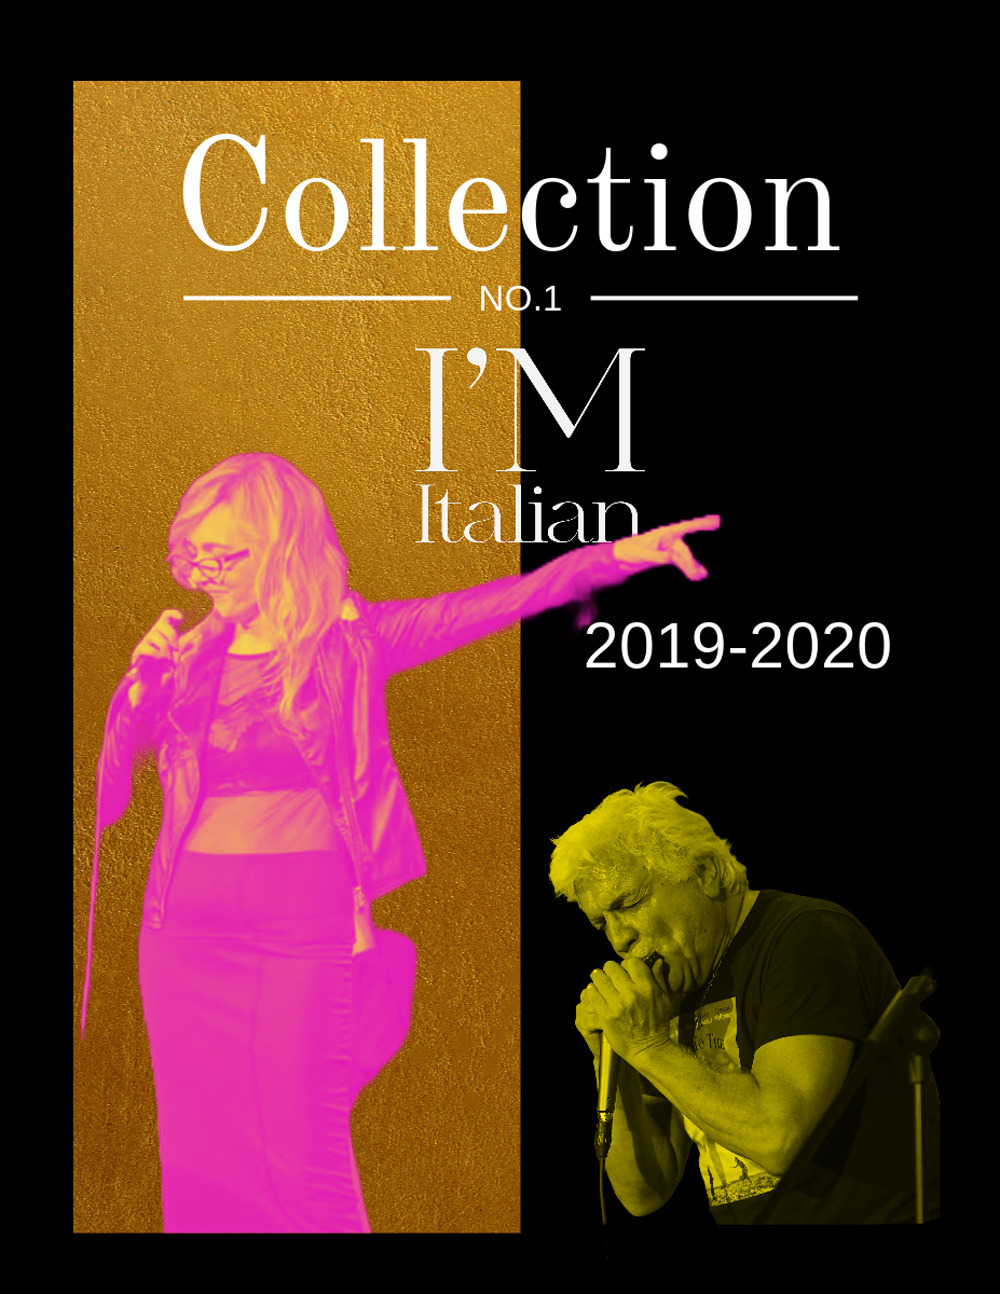 I'm italian collection 2019-2020